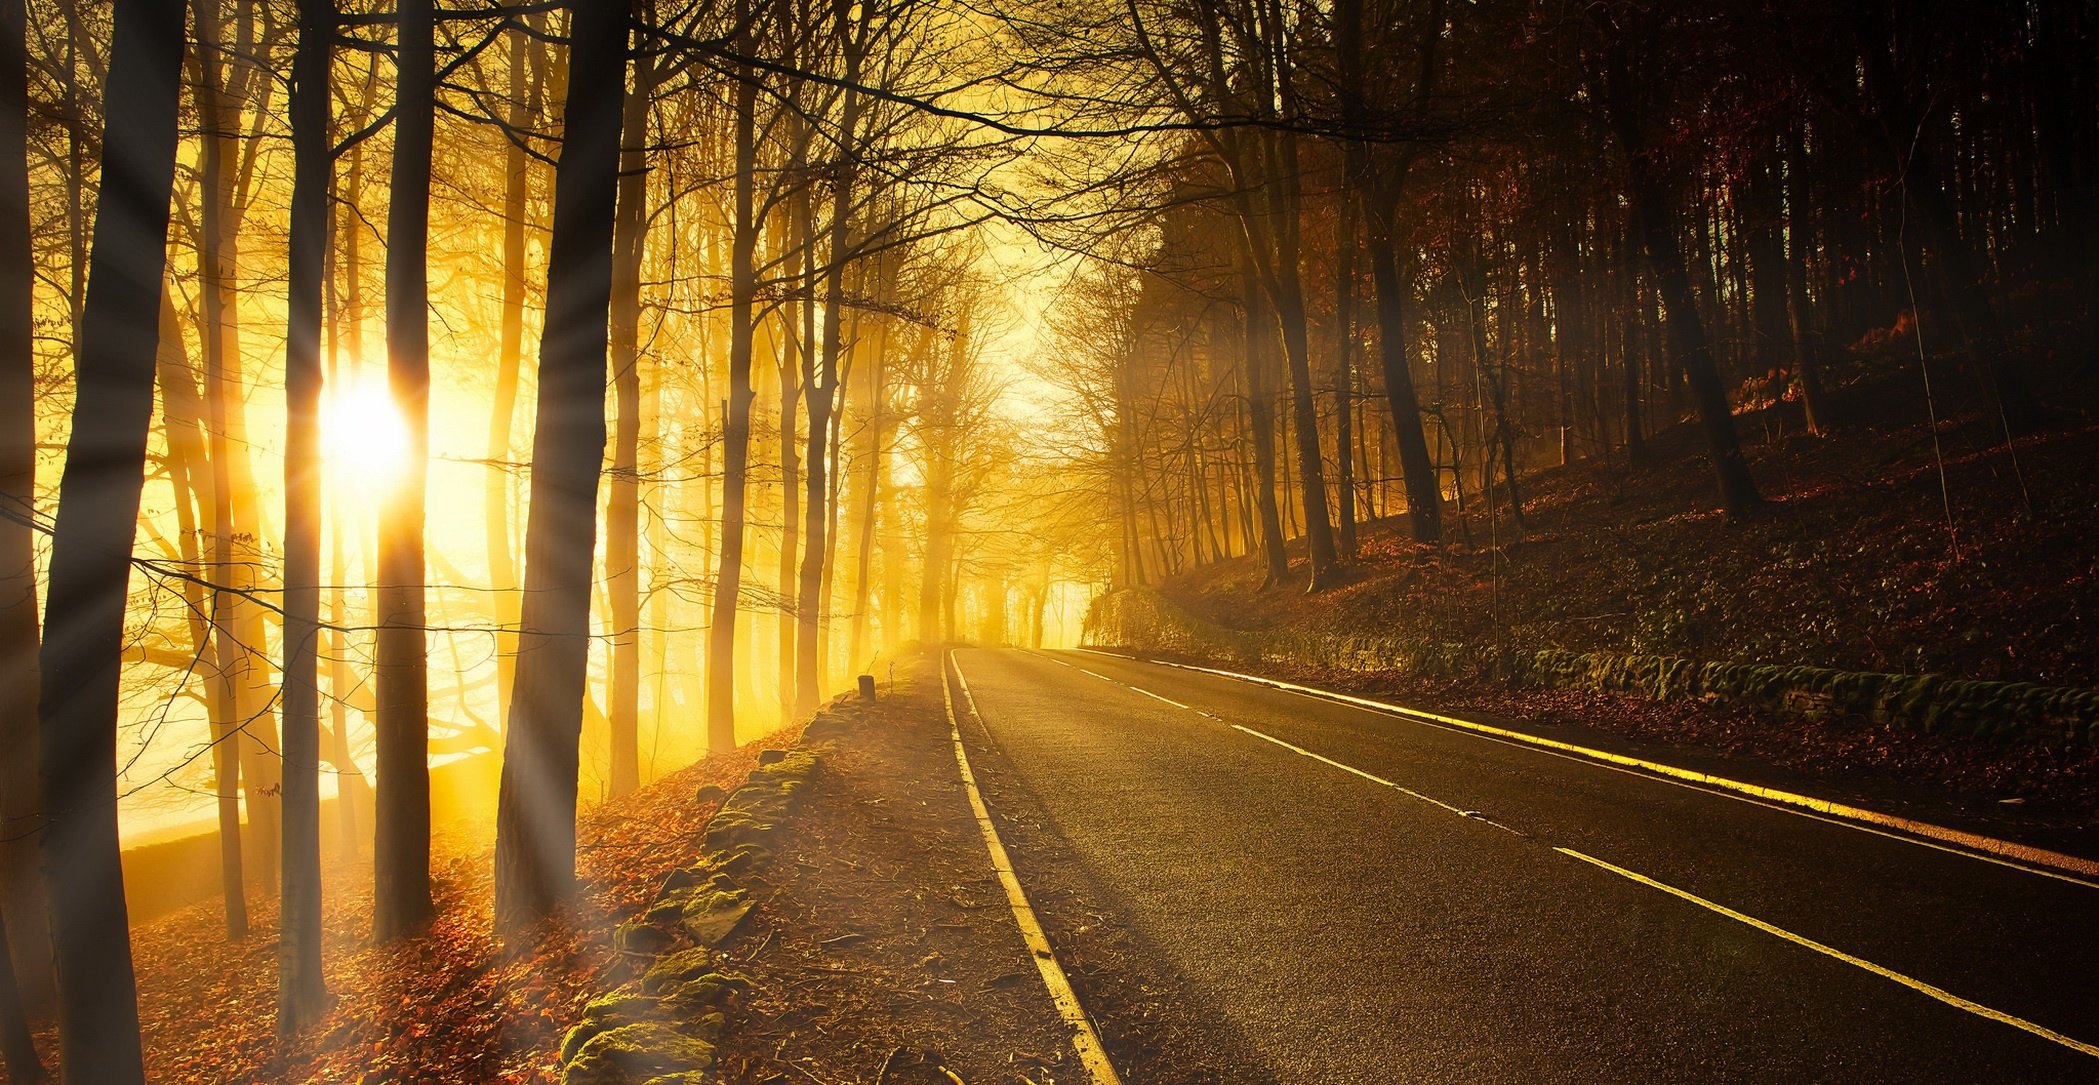 Желтый свет на дороге. Солнце на дороге. Лесная дорога. Осень дорога солнце. Лес дорога солнце.